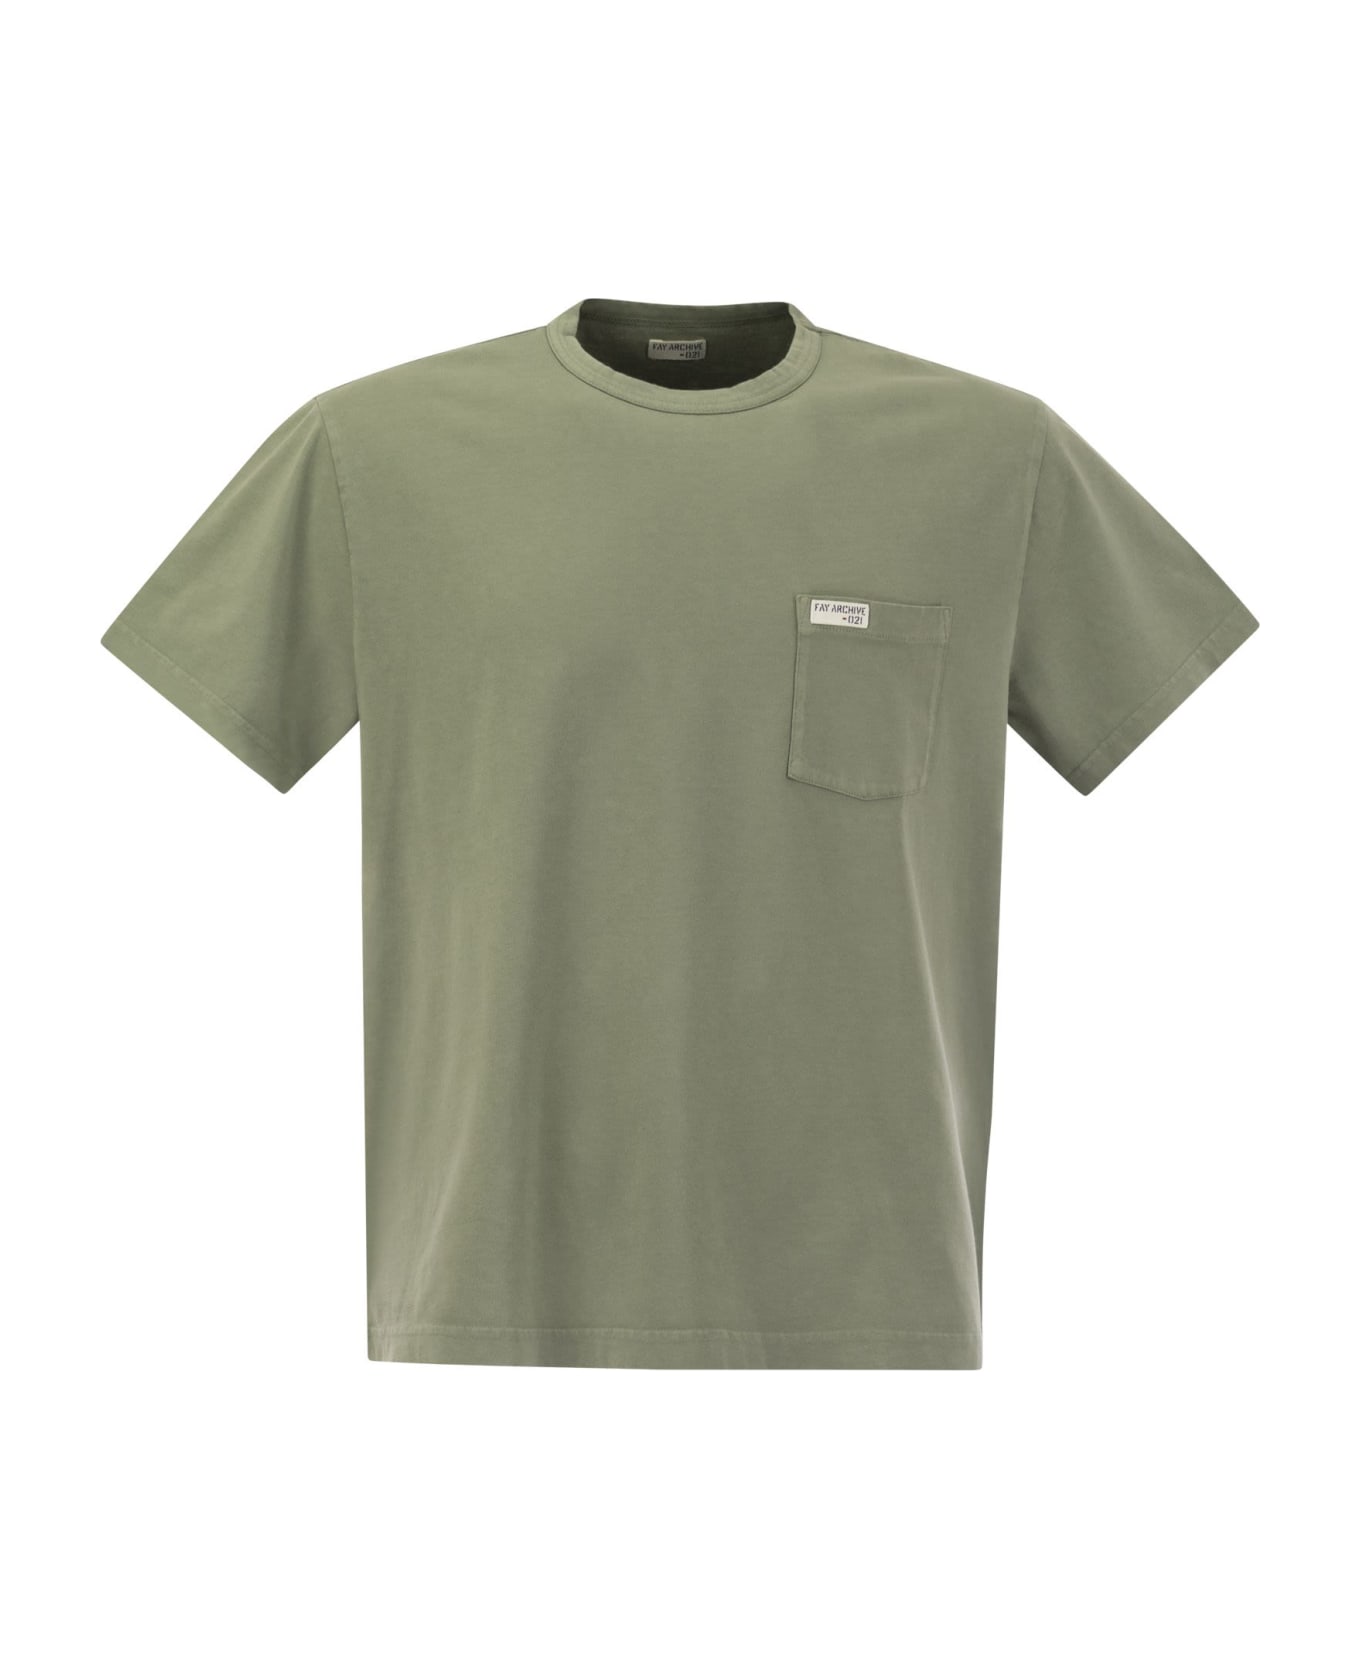 Fay Green Military T-shirt - Green